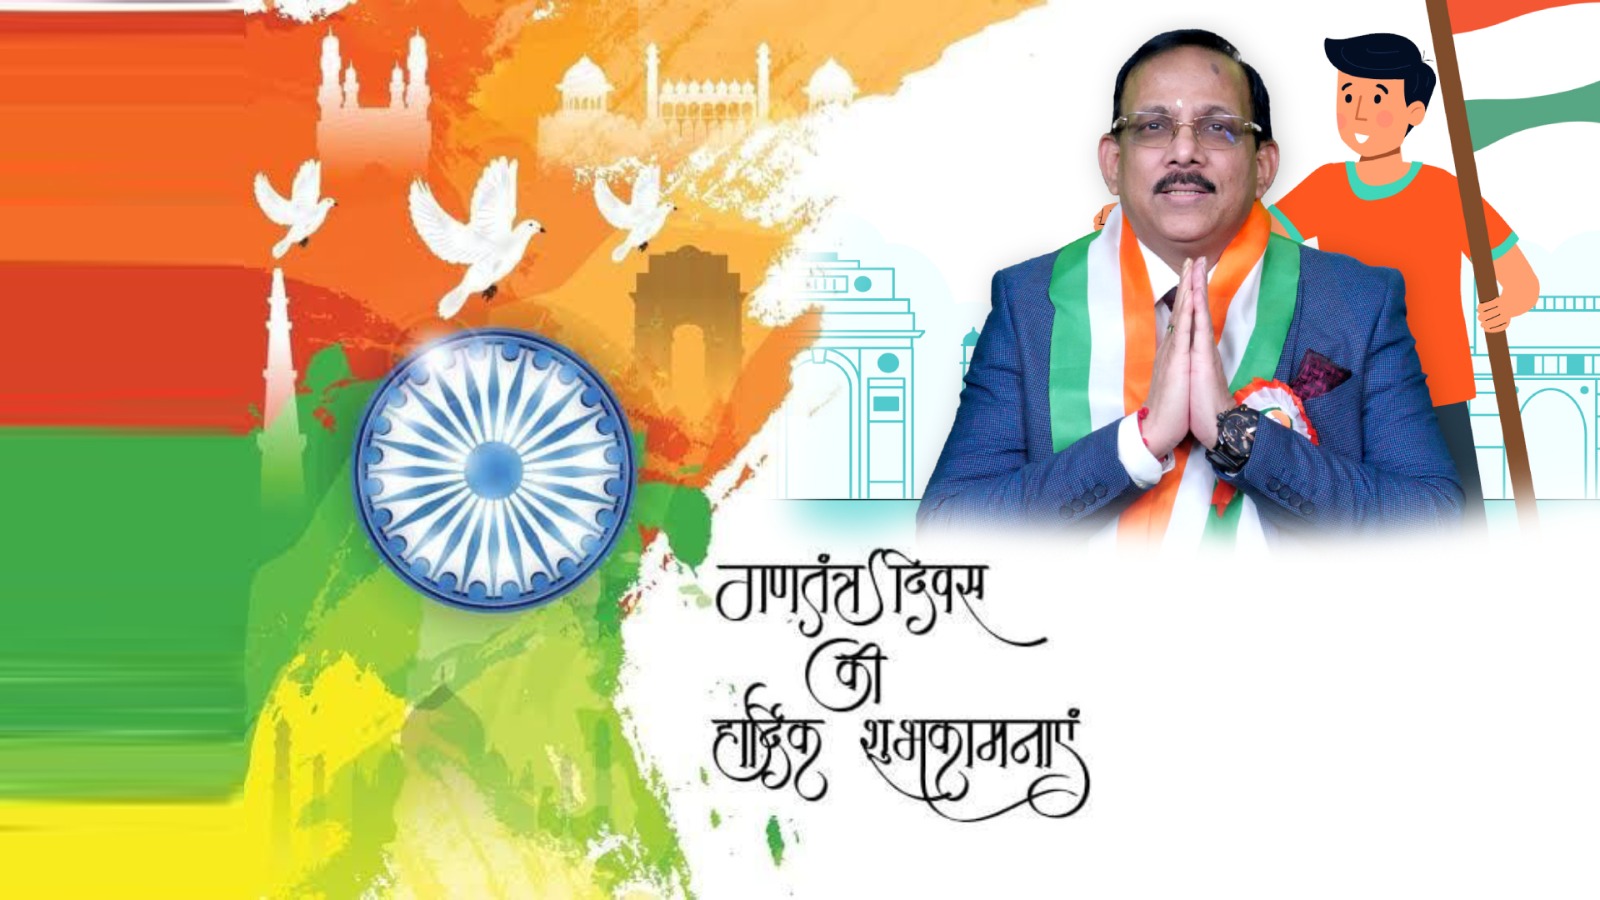 Wishing Everyone A Very Happy 75th Republic Day by Aarambhtv CEO (Dr.) Manoranjan Mohanty